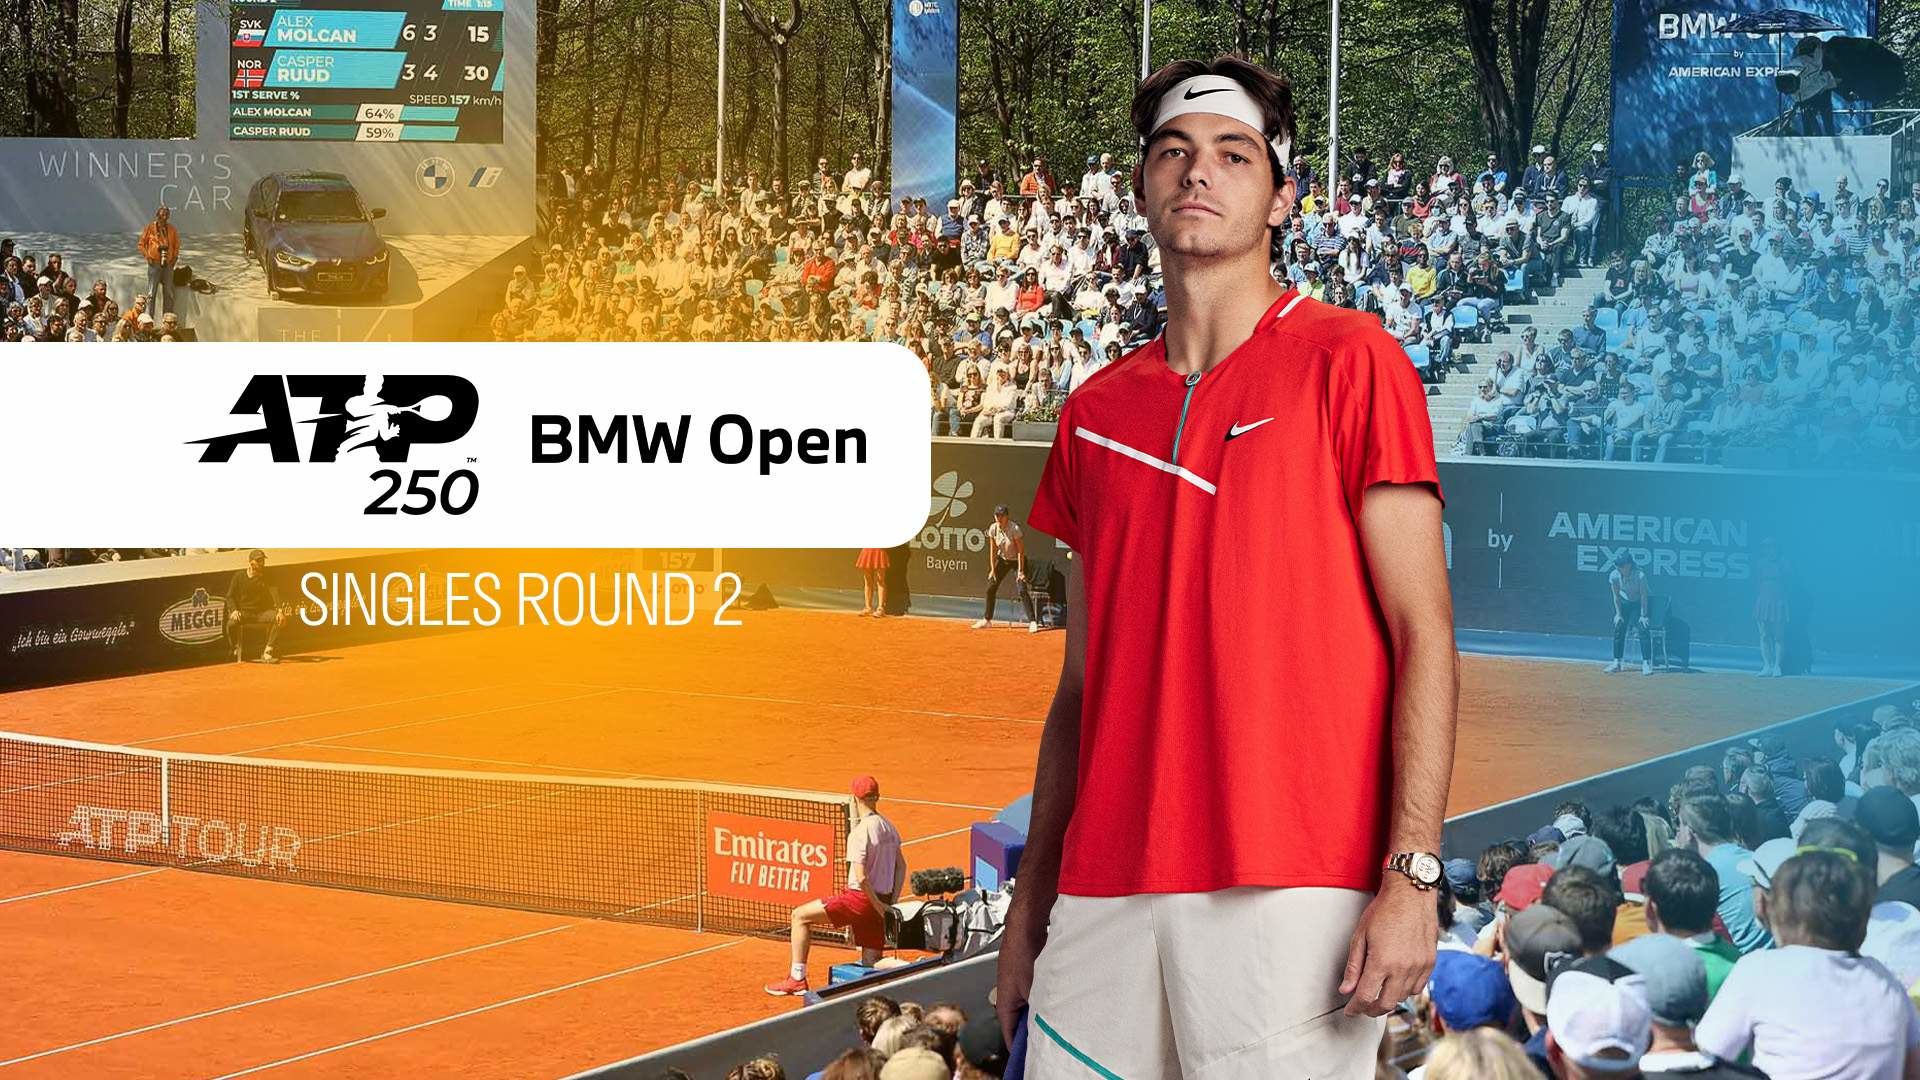 Teniss. Teniss: ATP 250 Munich. 2020/2024